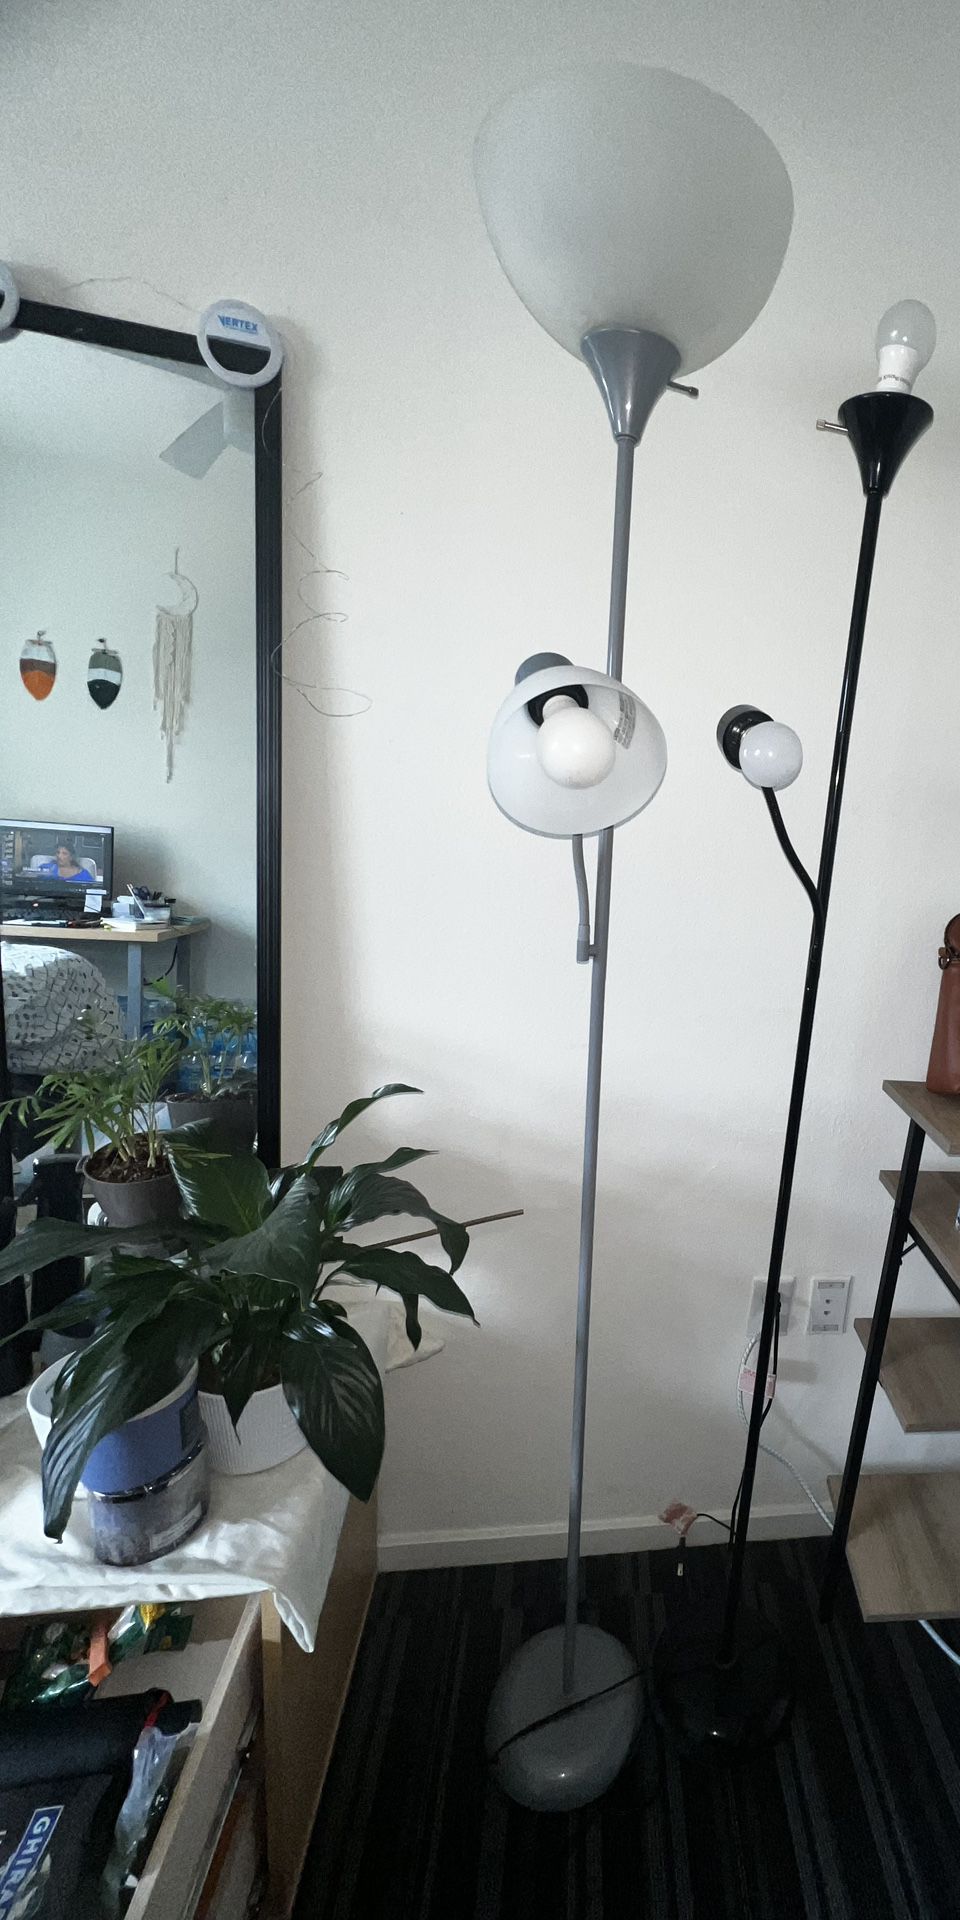 2 Tall room lamps + 8 light bulbs: $50